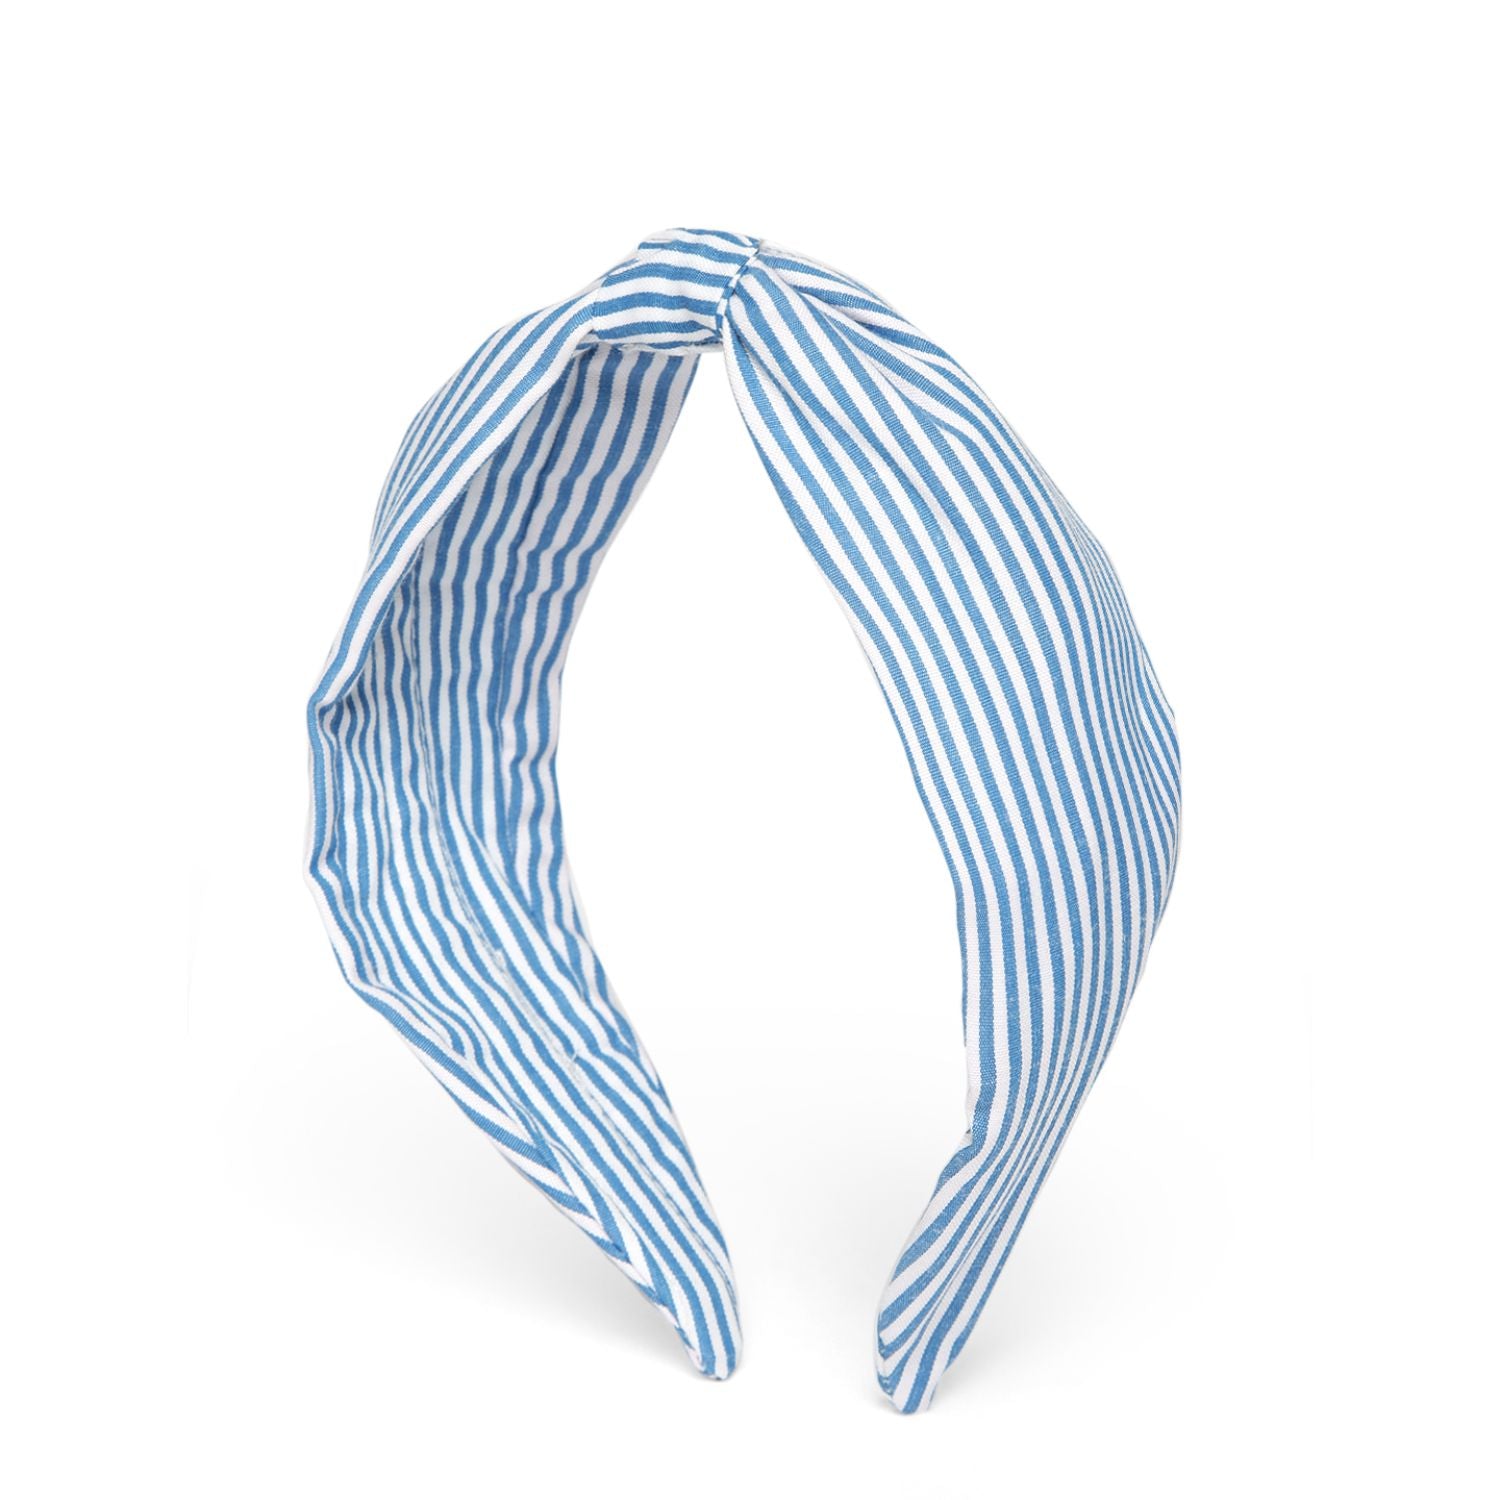 Elsa Headband In Blue & White Stripes Cotton